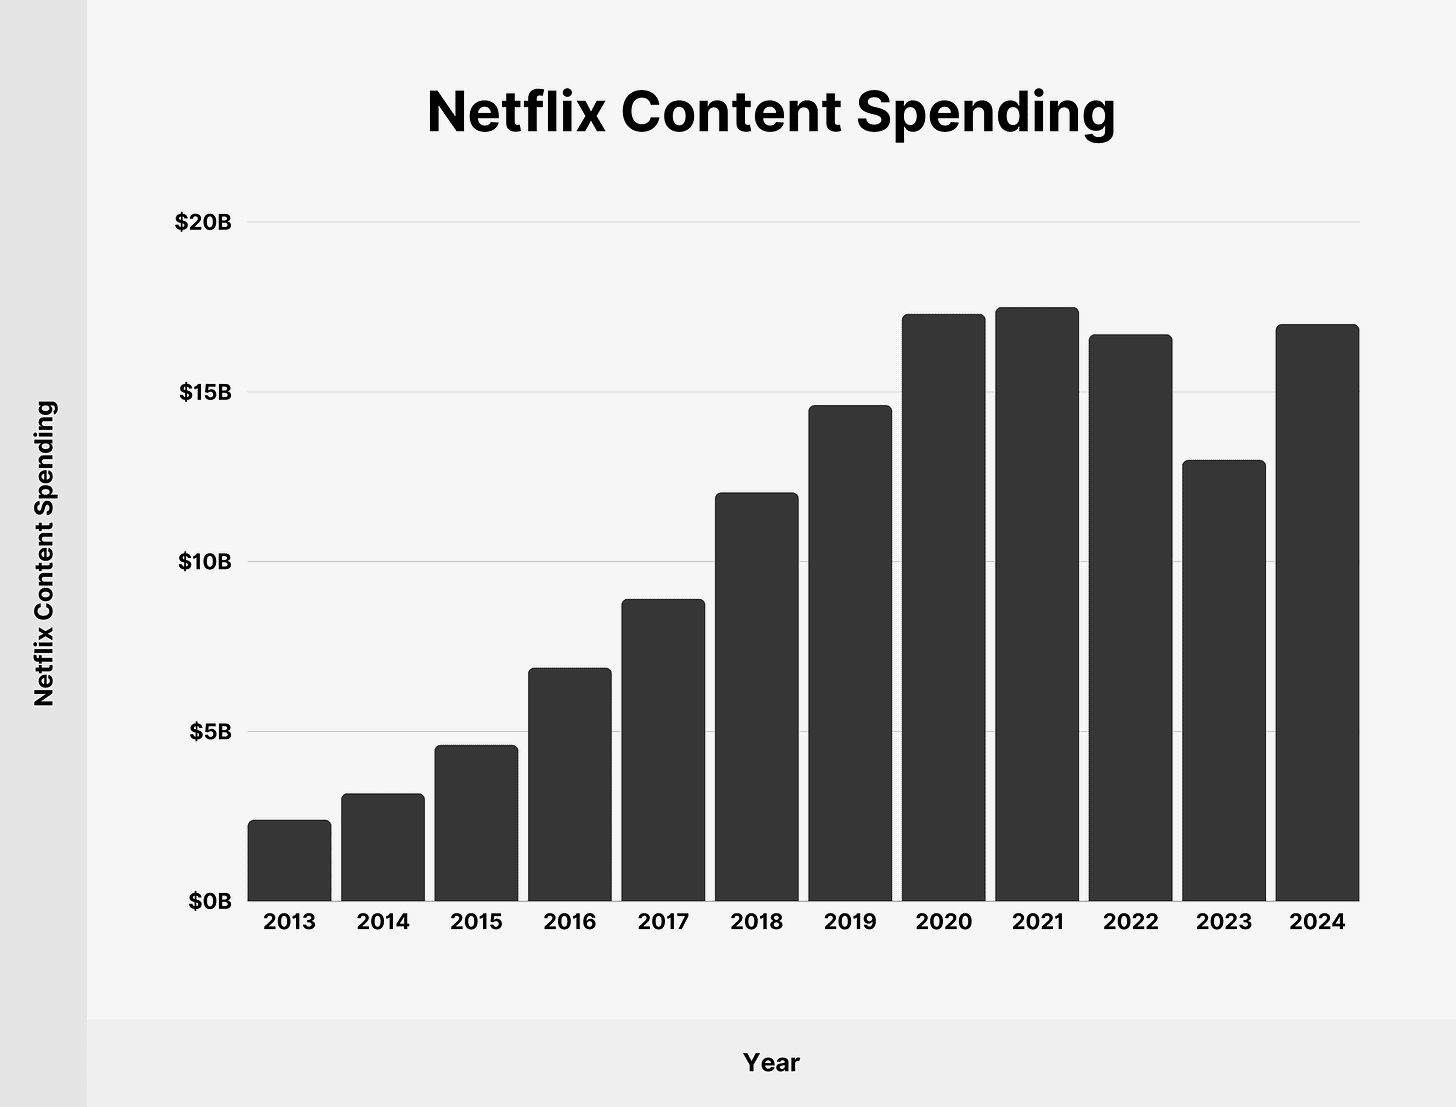 Netflix Content Spending